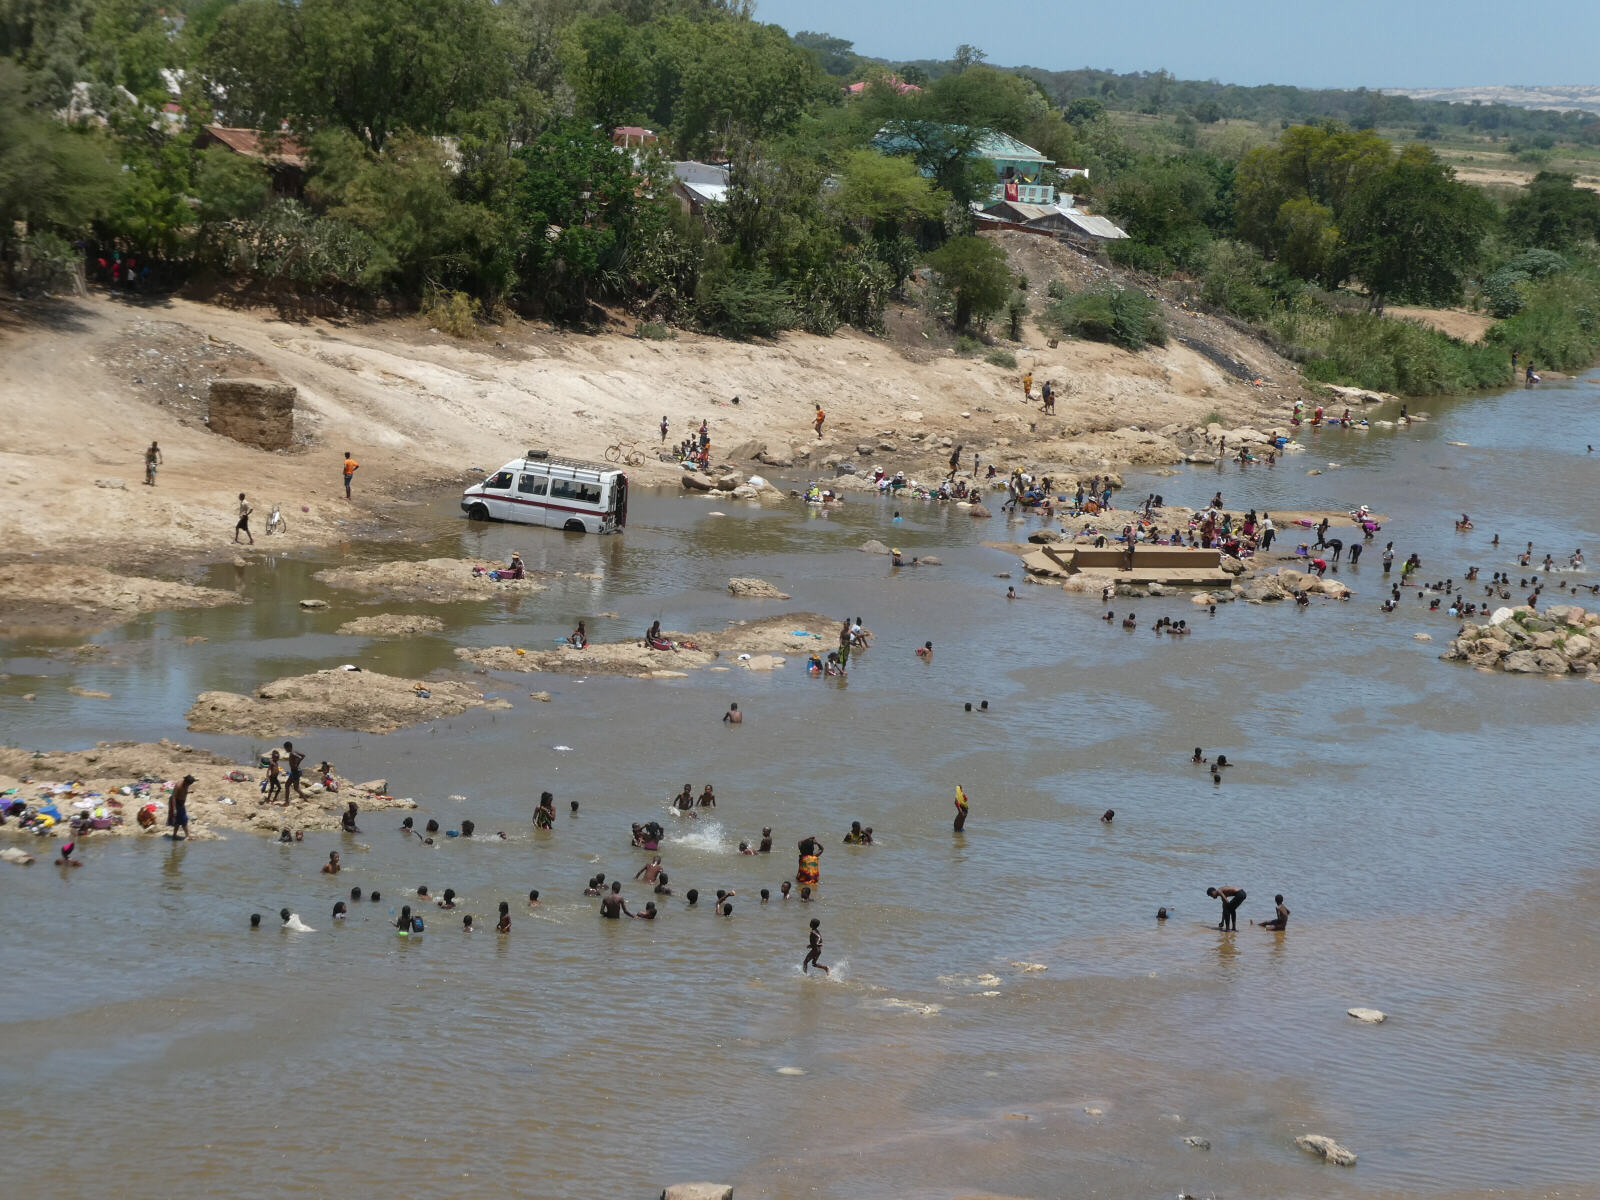 People enjoying the river in Madagascar